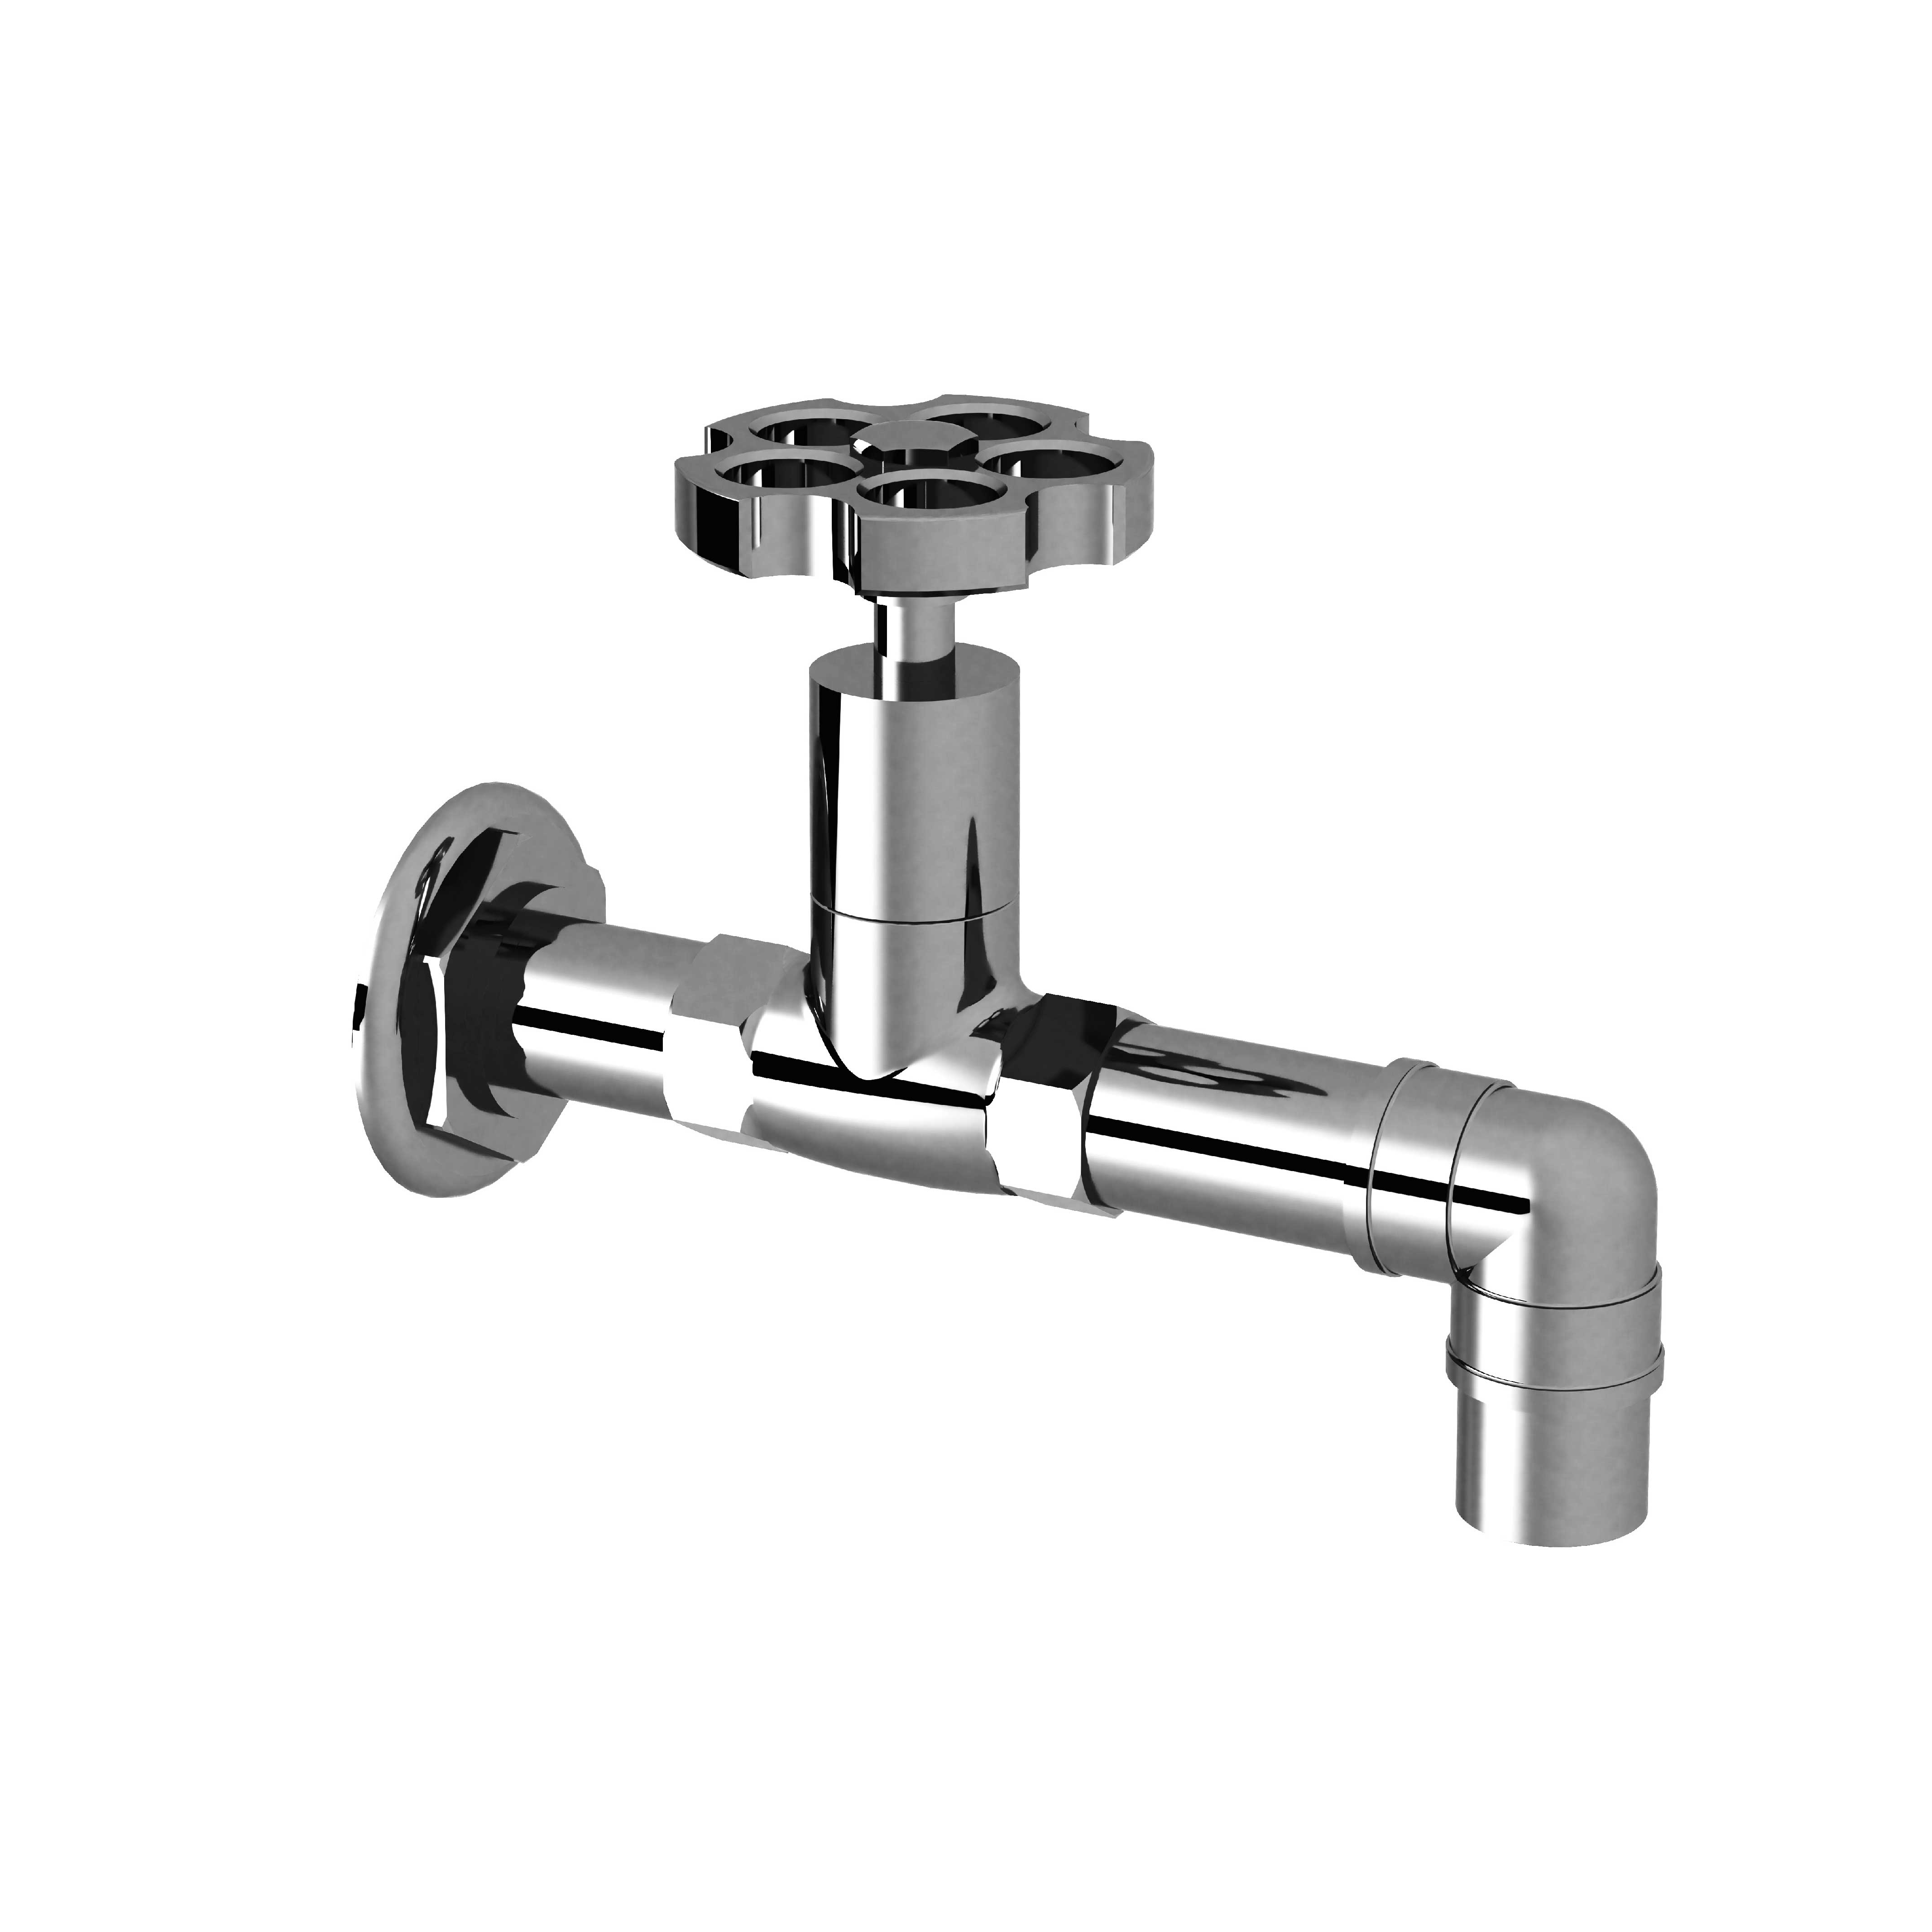 M81-4WS1 Wall mounted wash-hand basin tap